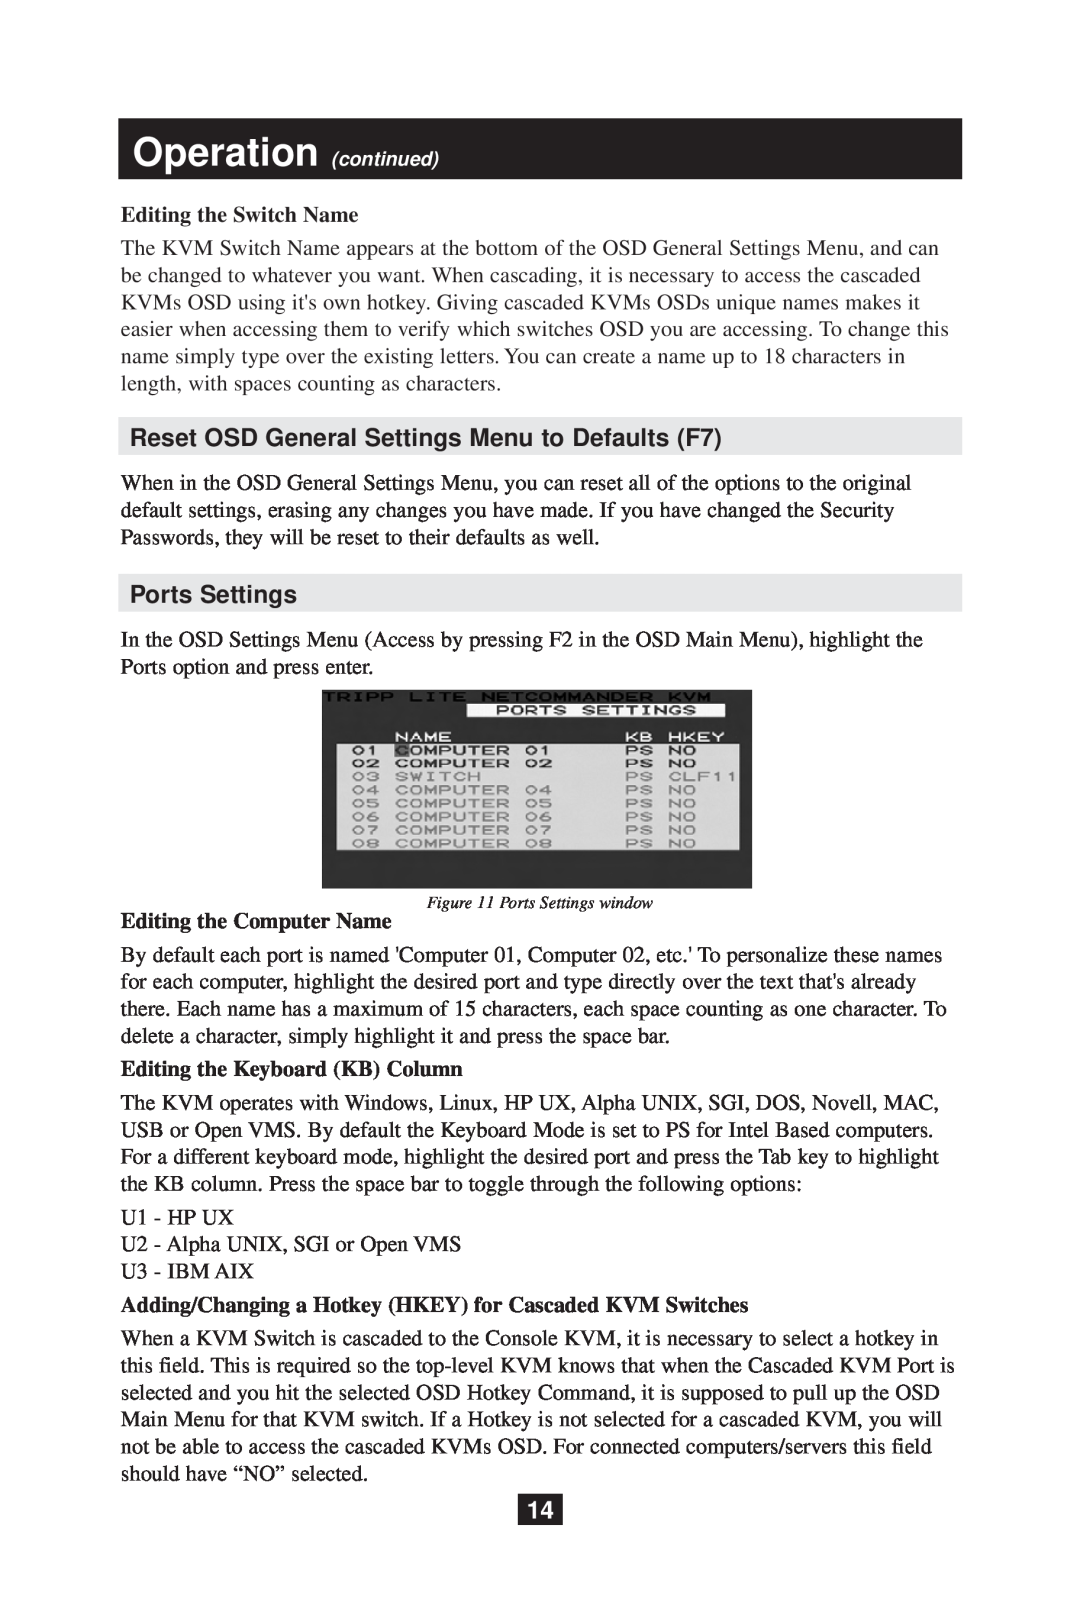 Tripp Lite B070-008-19 owner manual Reset OSD General Settings Menu to Defaults F7, Ports Settings, Editing the Switch Name 